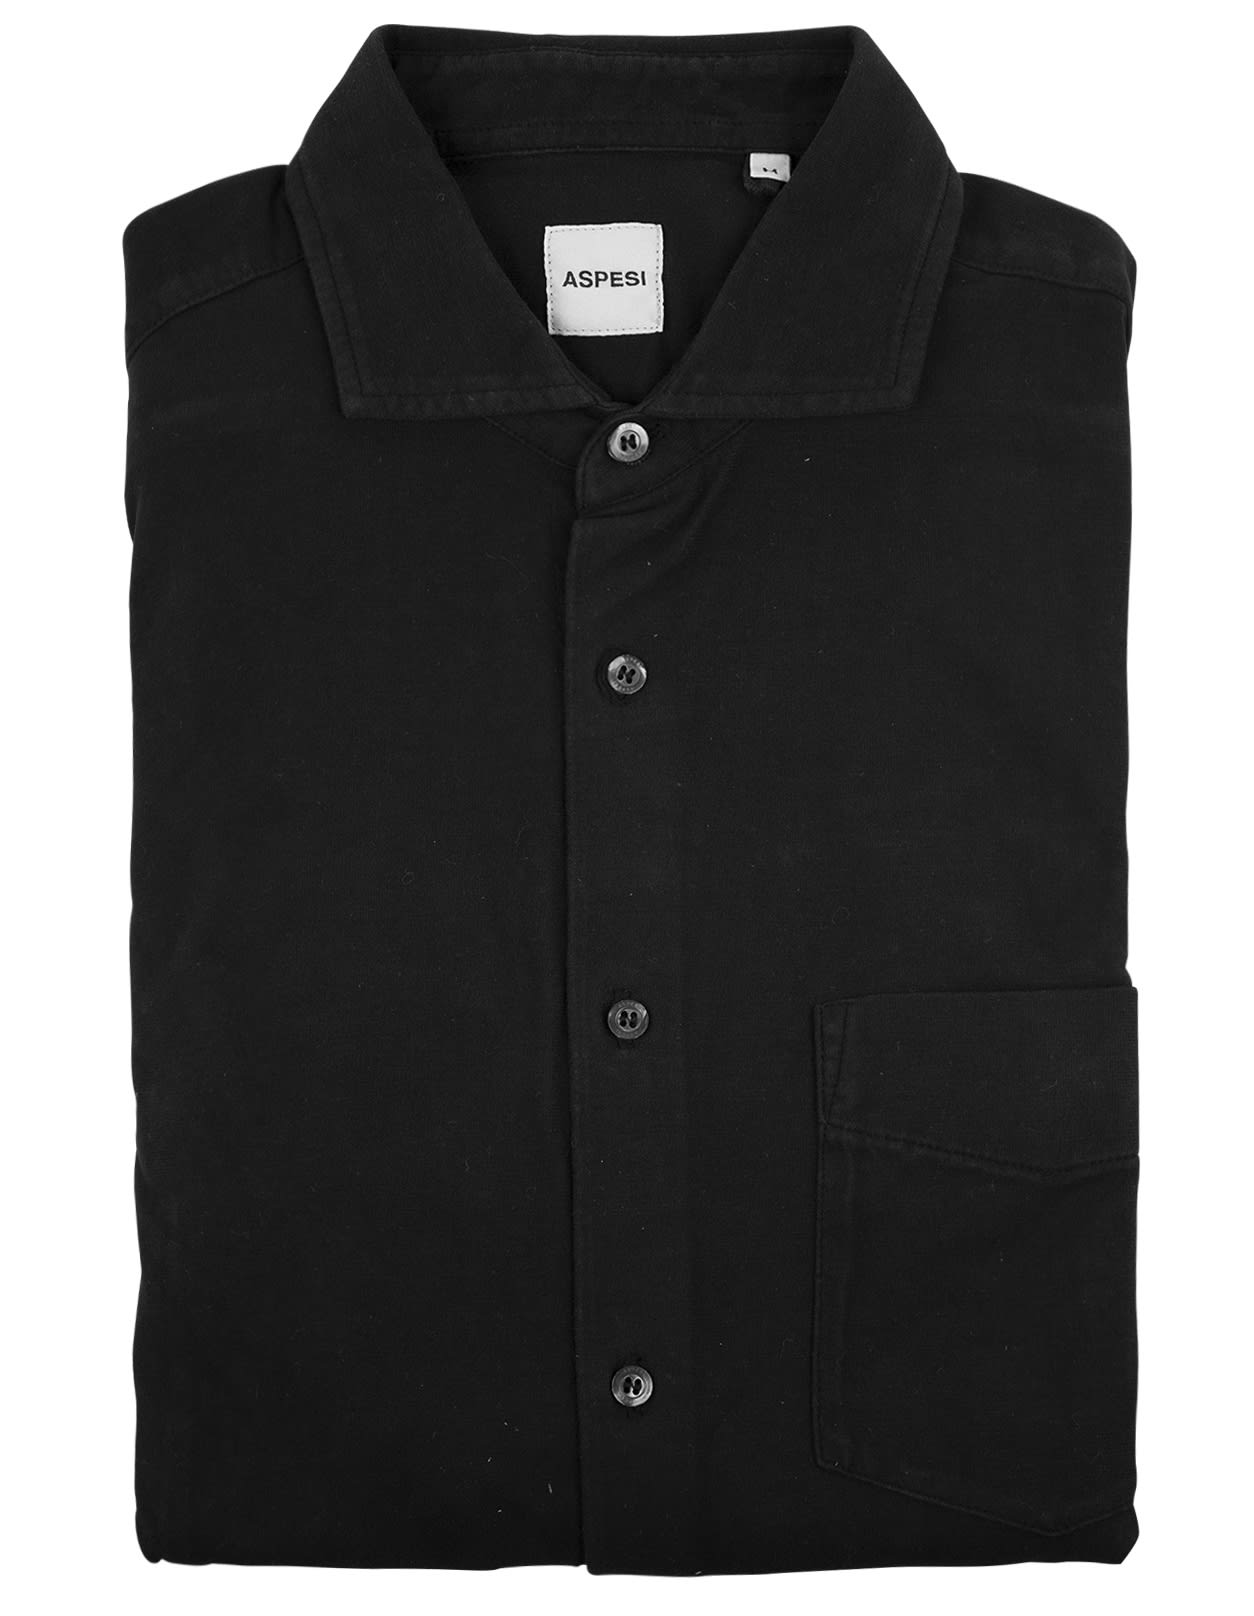 Aspesi Man Shirt In Black Cotton Jersey